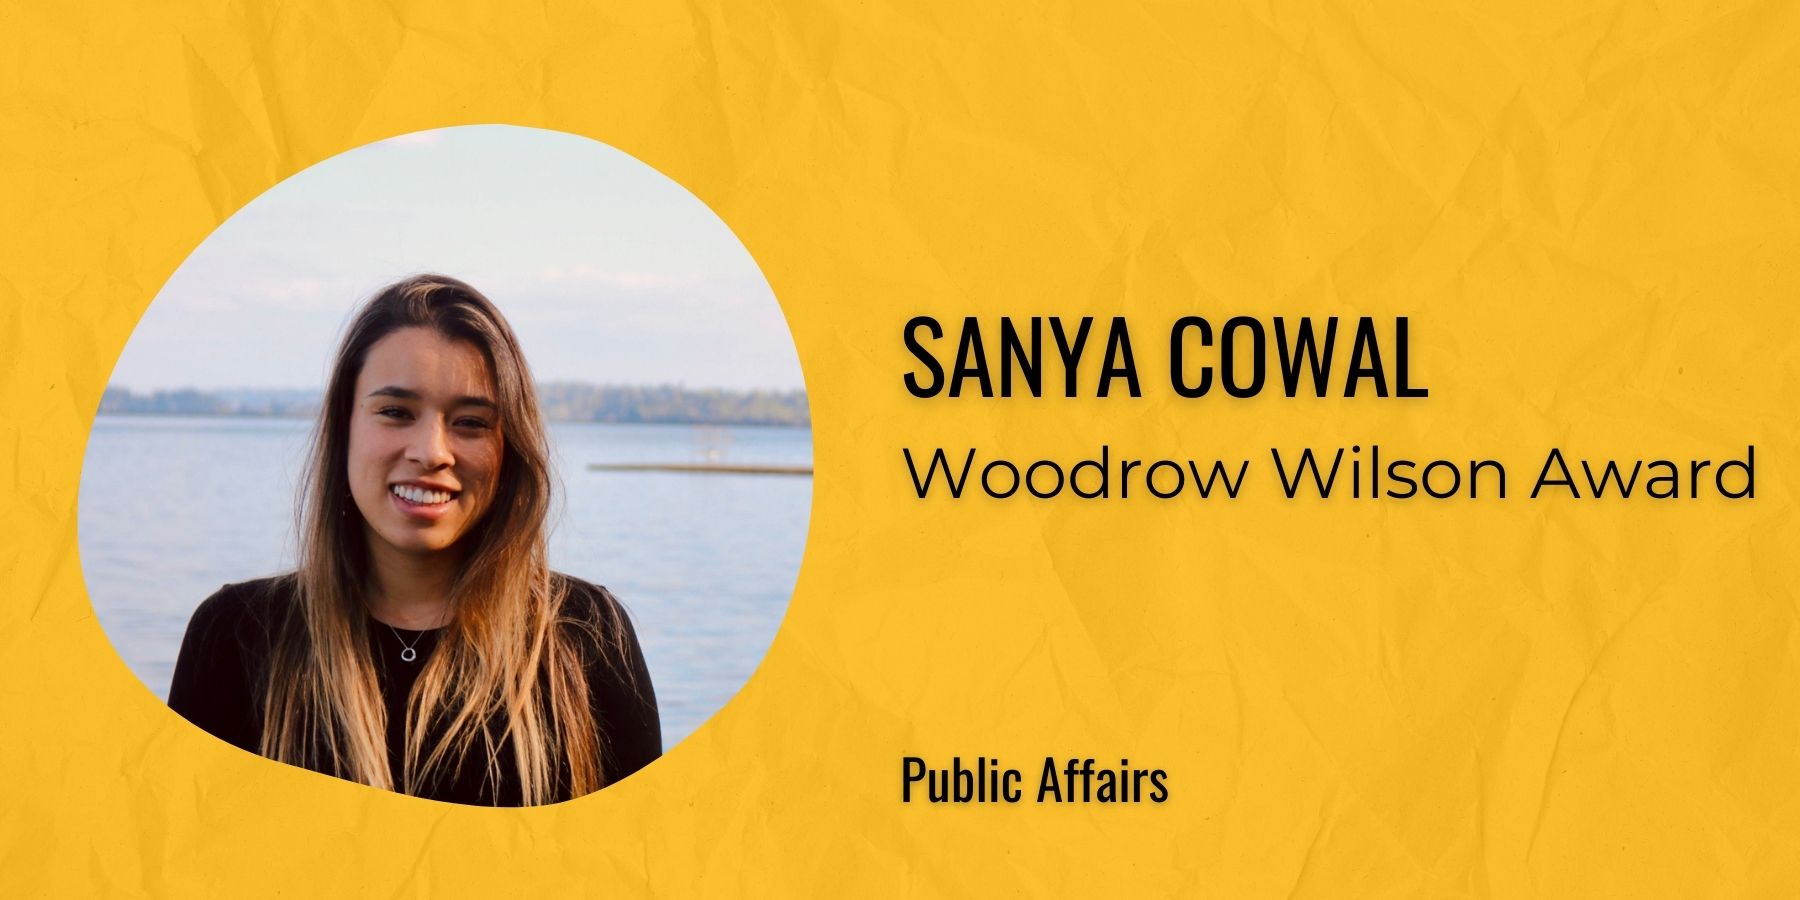 Image of Sanya Cowal with text: Woodrow Wilson Award, Public Affairs
